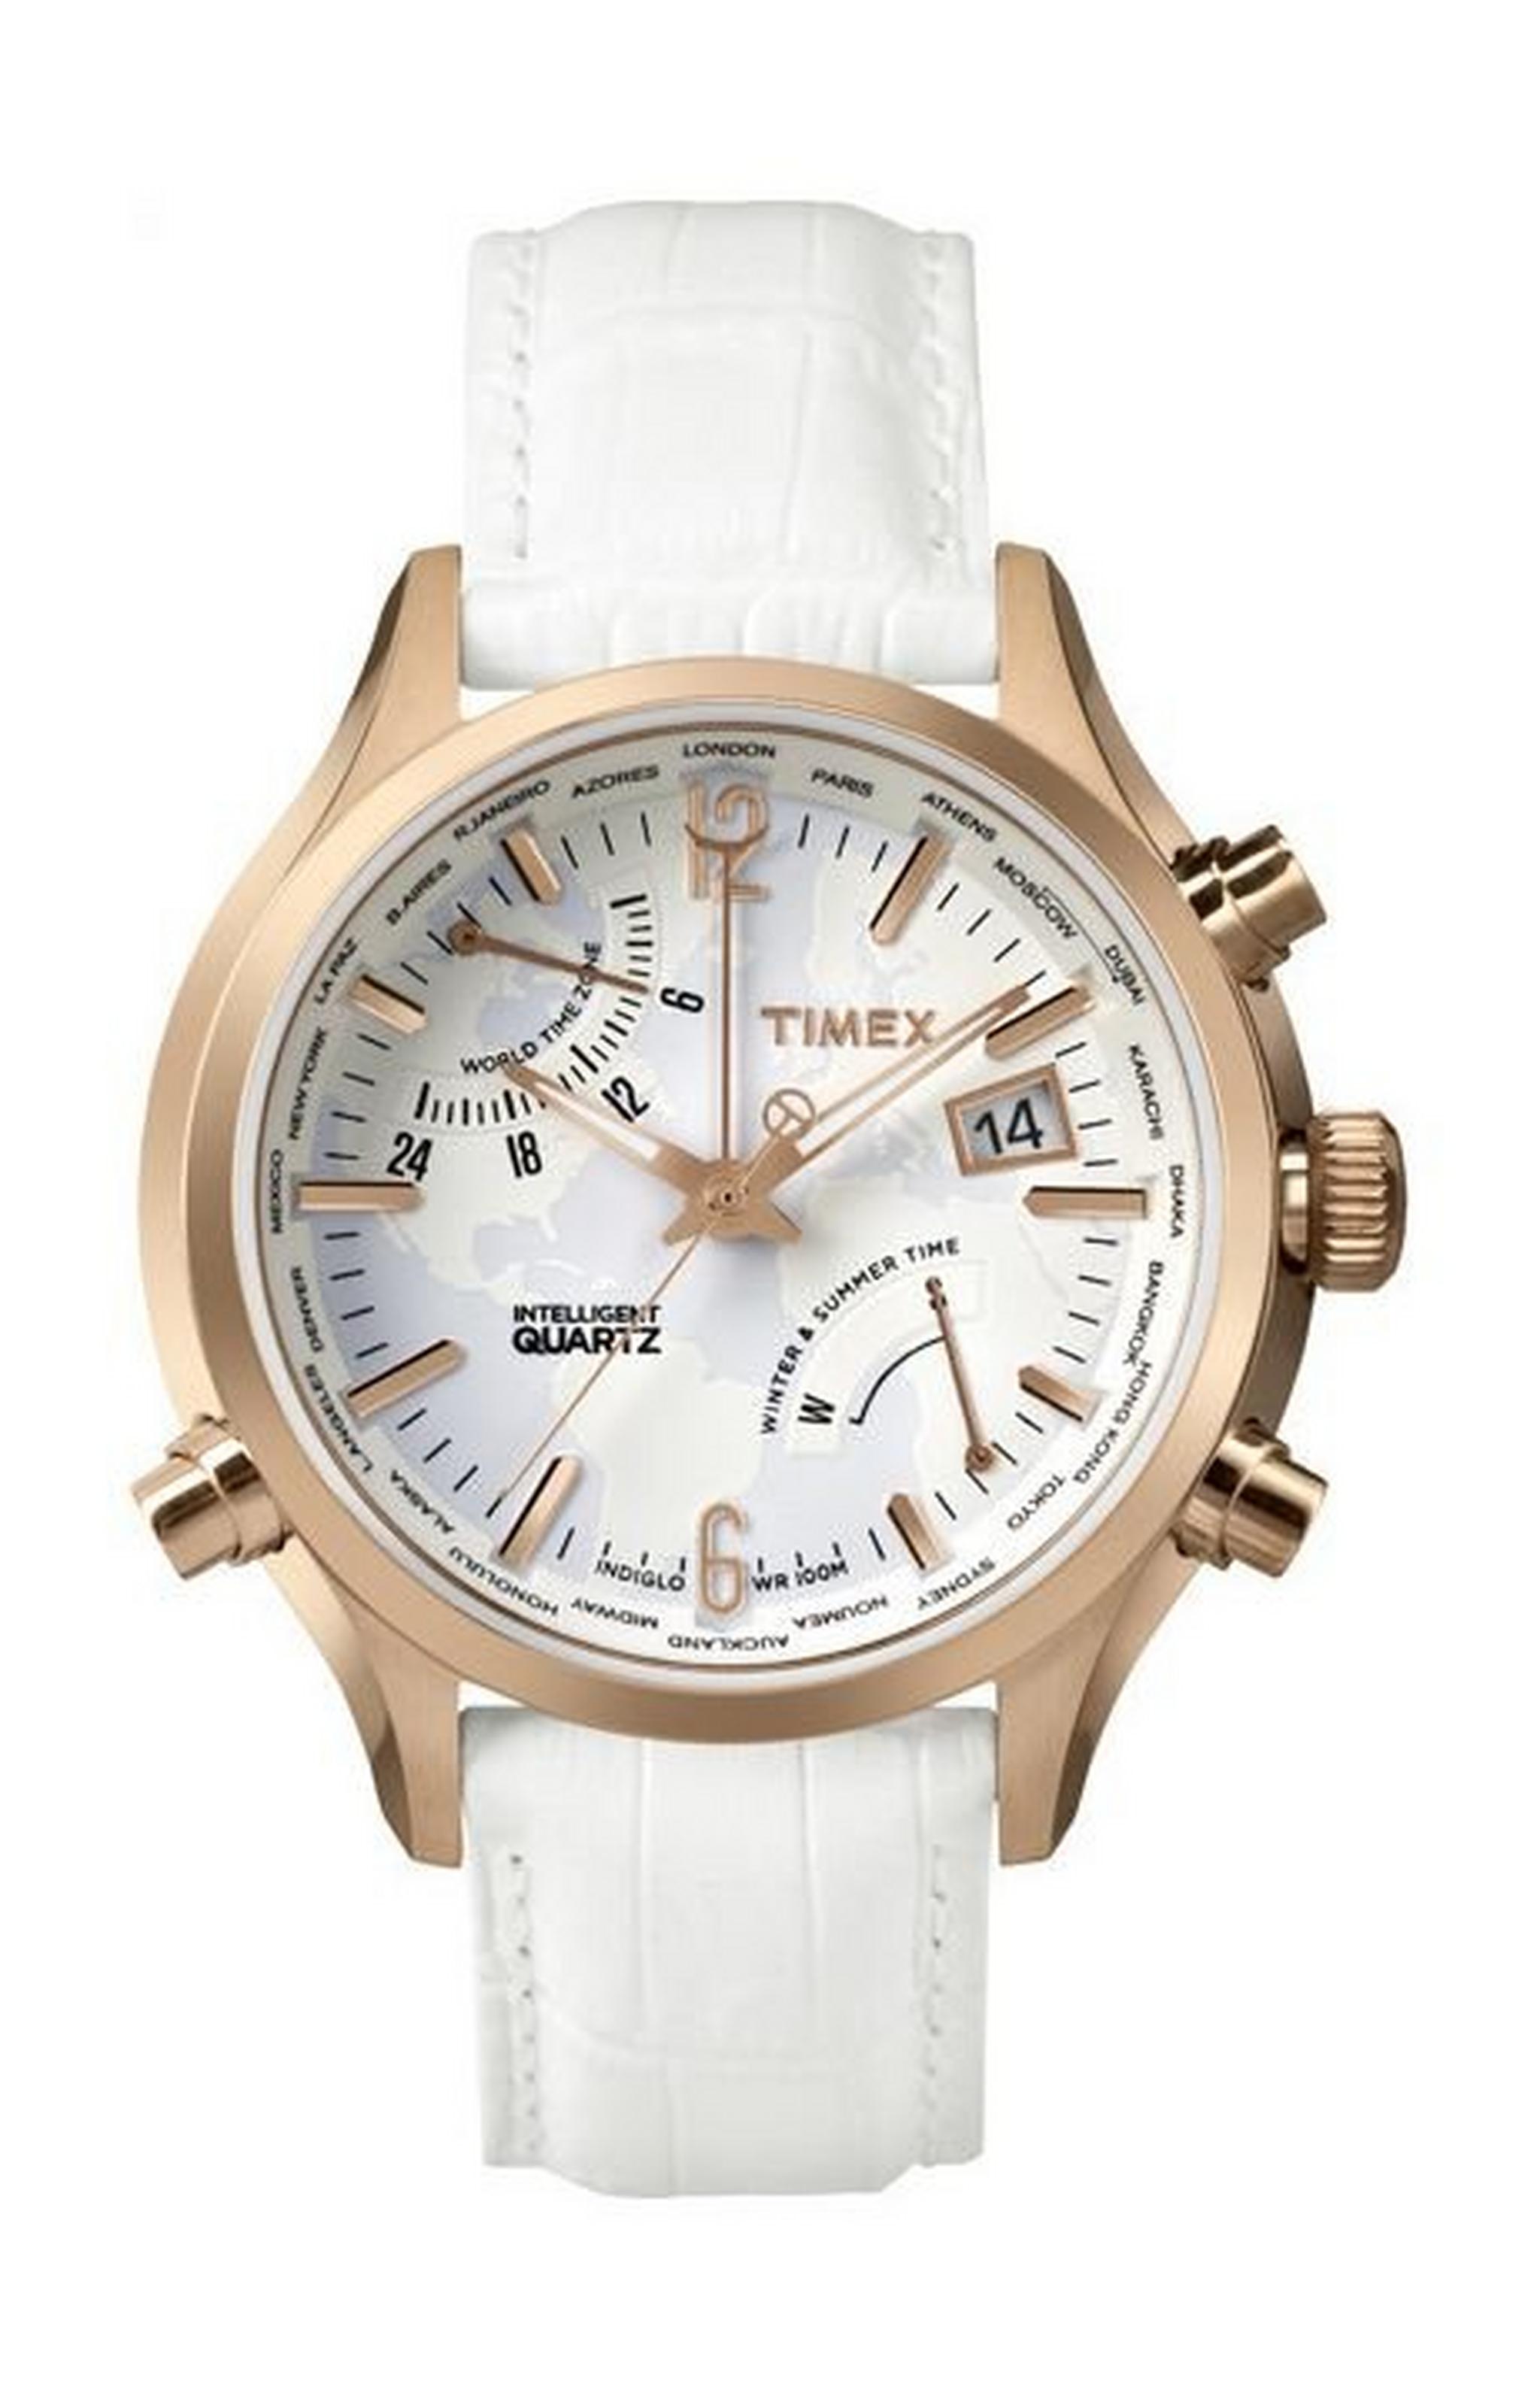 Timex Intelligent Quartz Chronograph Unisex Watch - Leather Strap TW2P87800